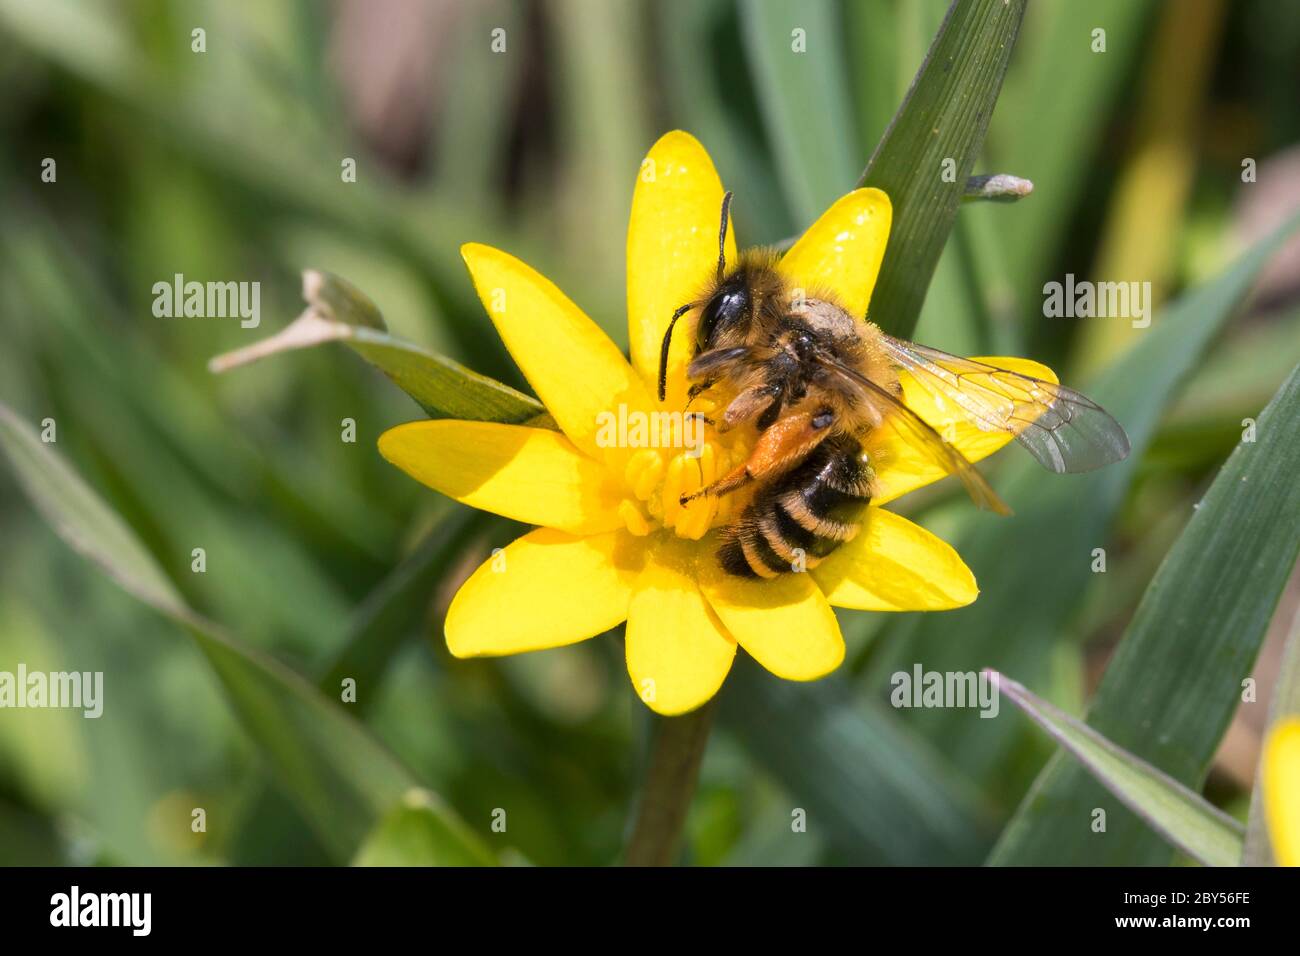 Yellow-legged mining bee, Yellow-legged mining-bee (Andrena flavipes), female visiting a lesser celandine flower, Ranunculus ficaria, Germany Stock Photo